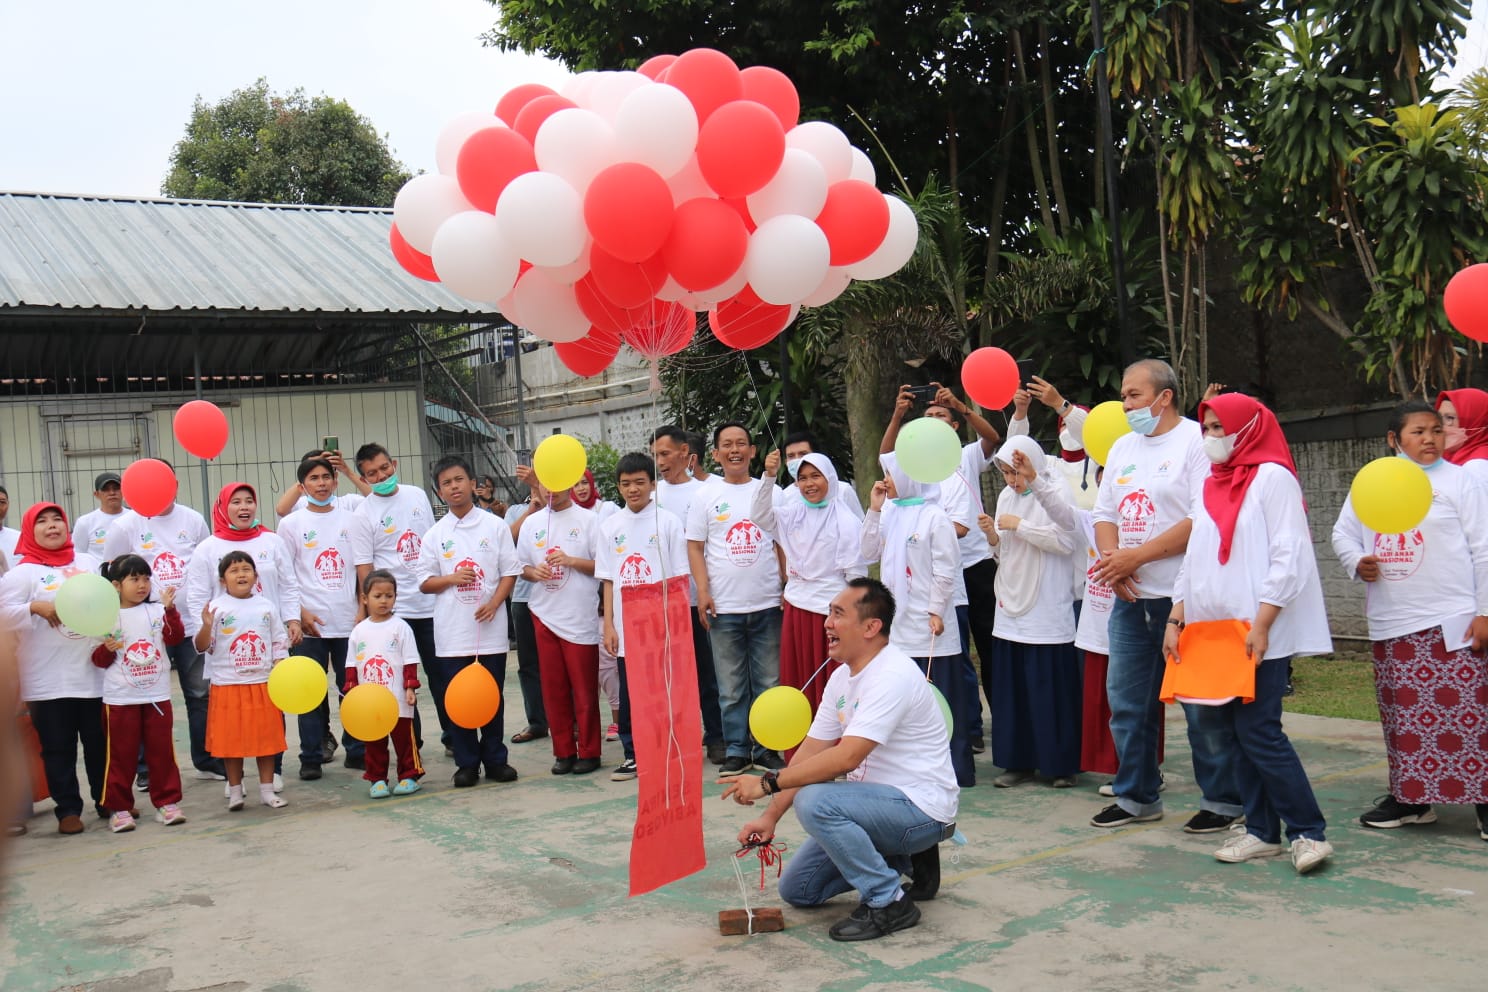 Sentra Abiyoso Tebar Semangat bagi Anak-anak Indonesia